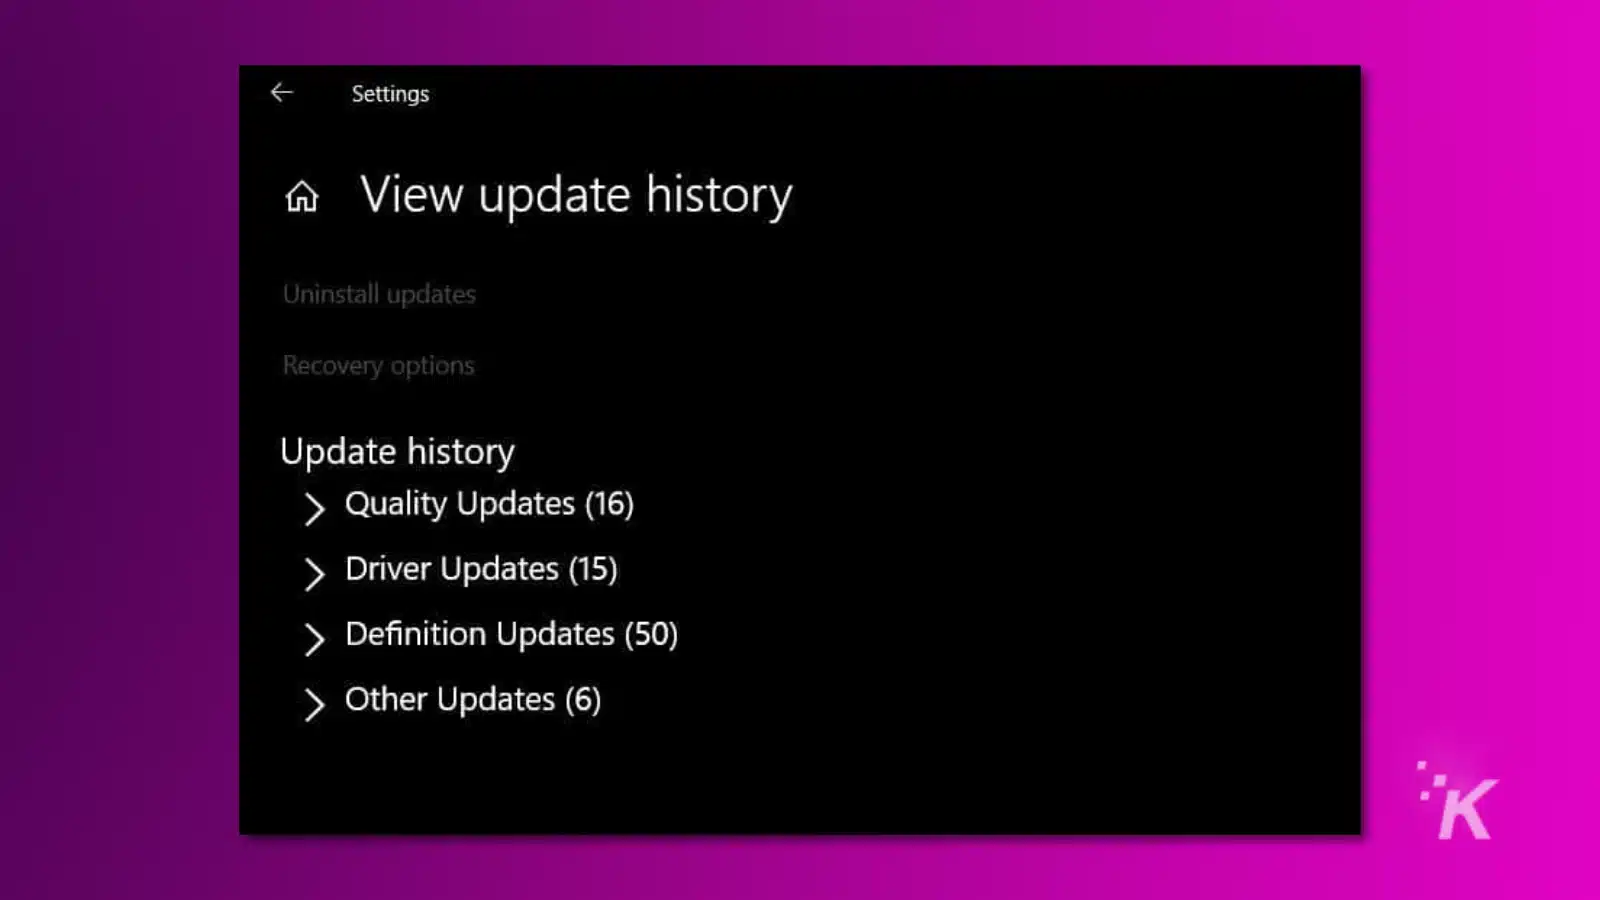 Screenshot of windows 10 settings menu showing windows update history